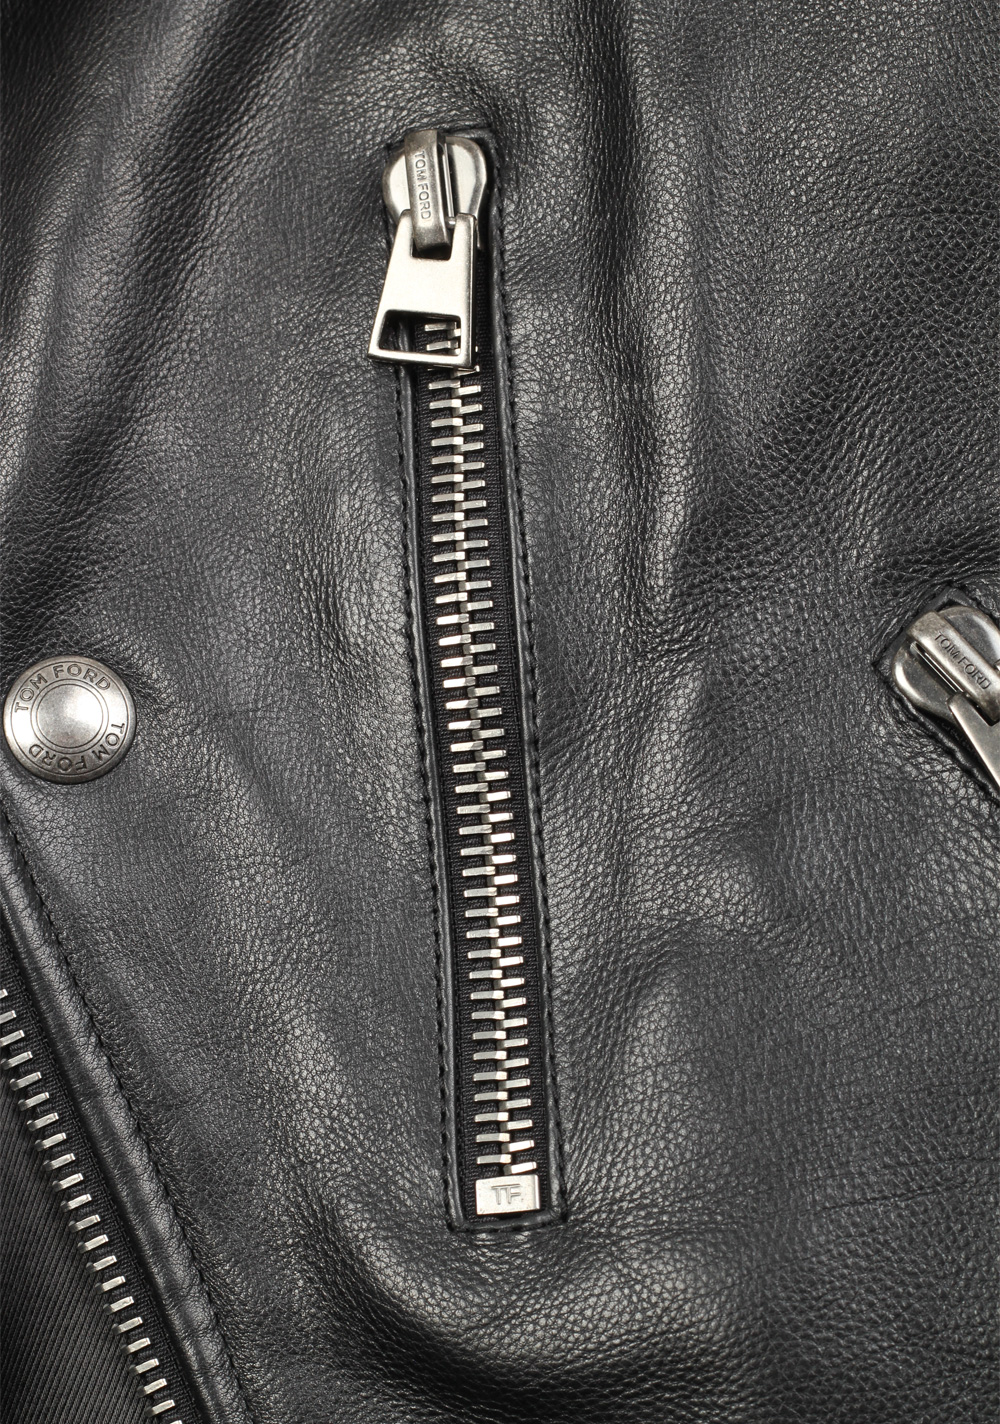 TOM FORD Black Biker Leather Jacket Coat Size 48 / 38R U.S. Outerwear | Costume Limité